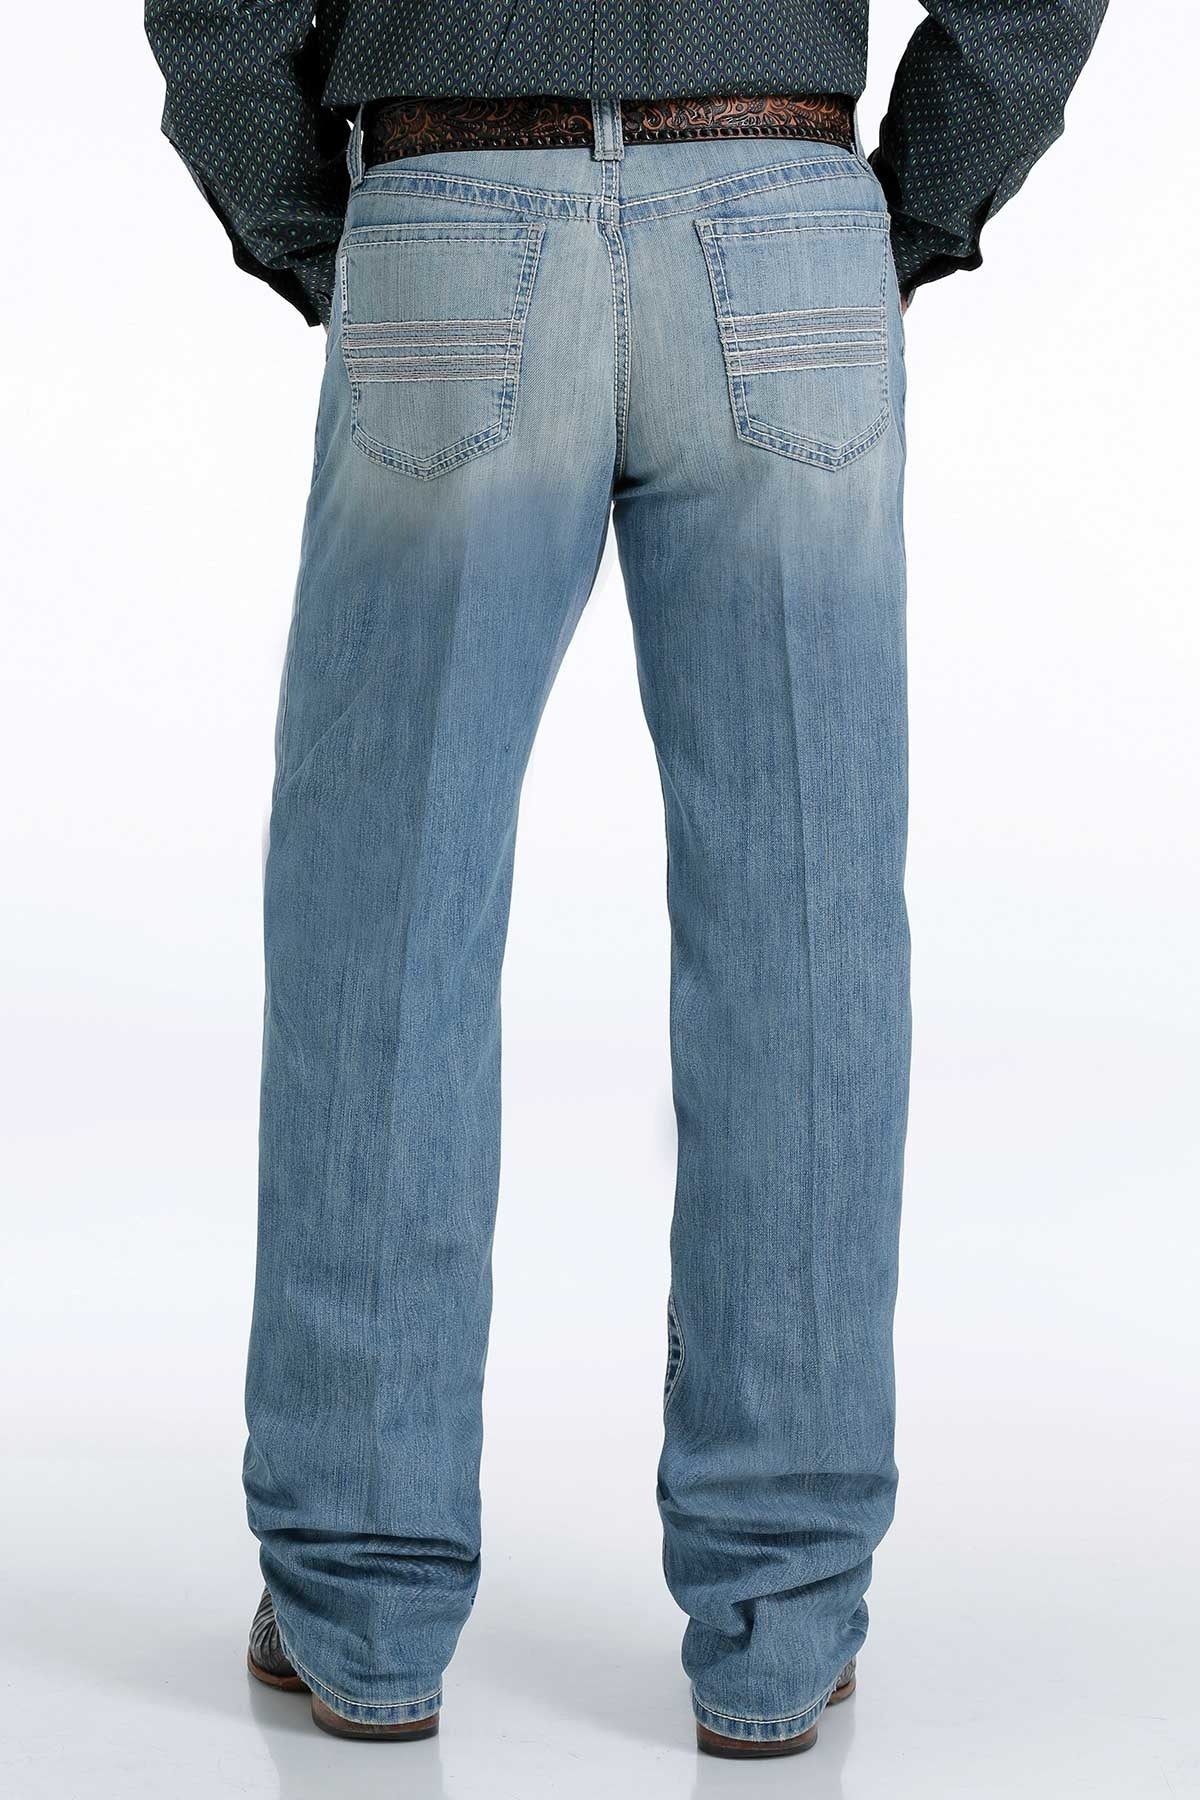 Cinch Men's White Label Jeans-Light Stone